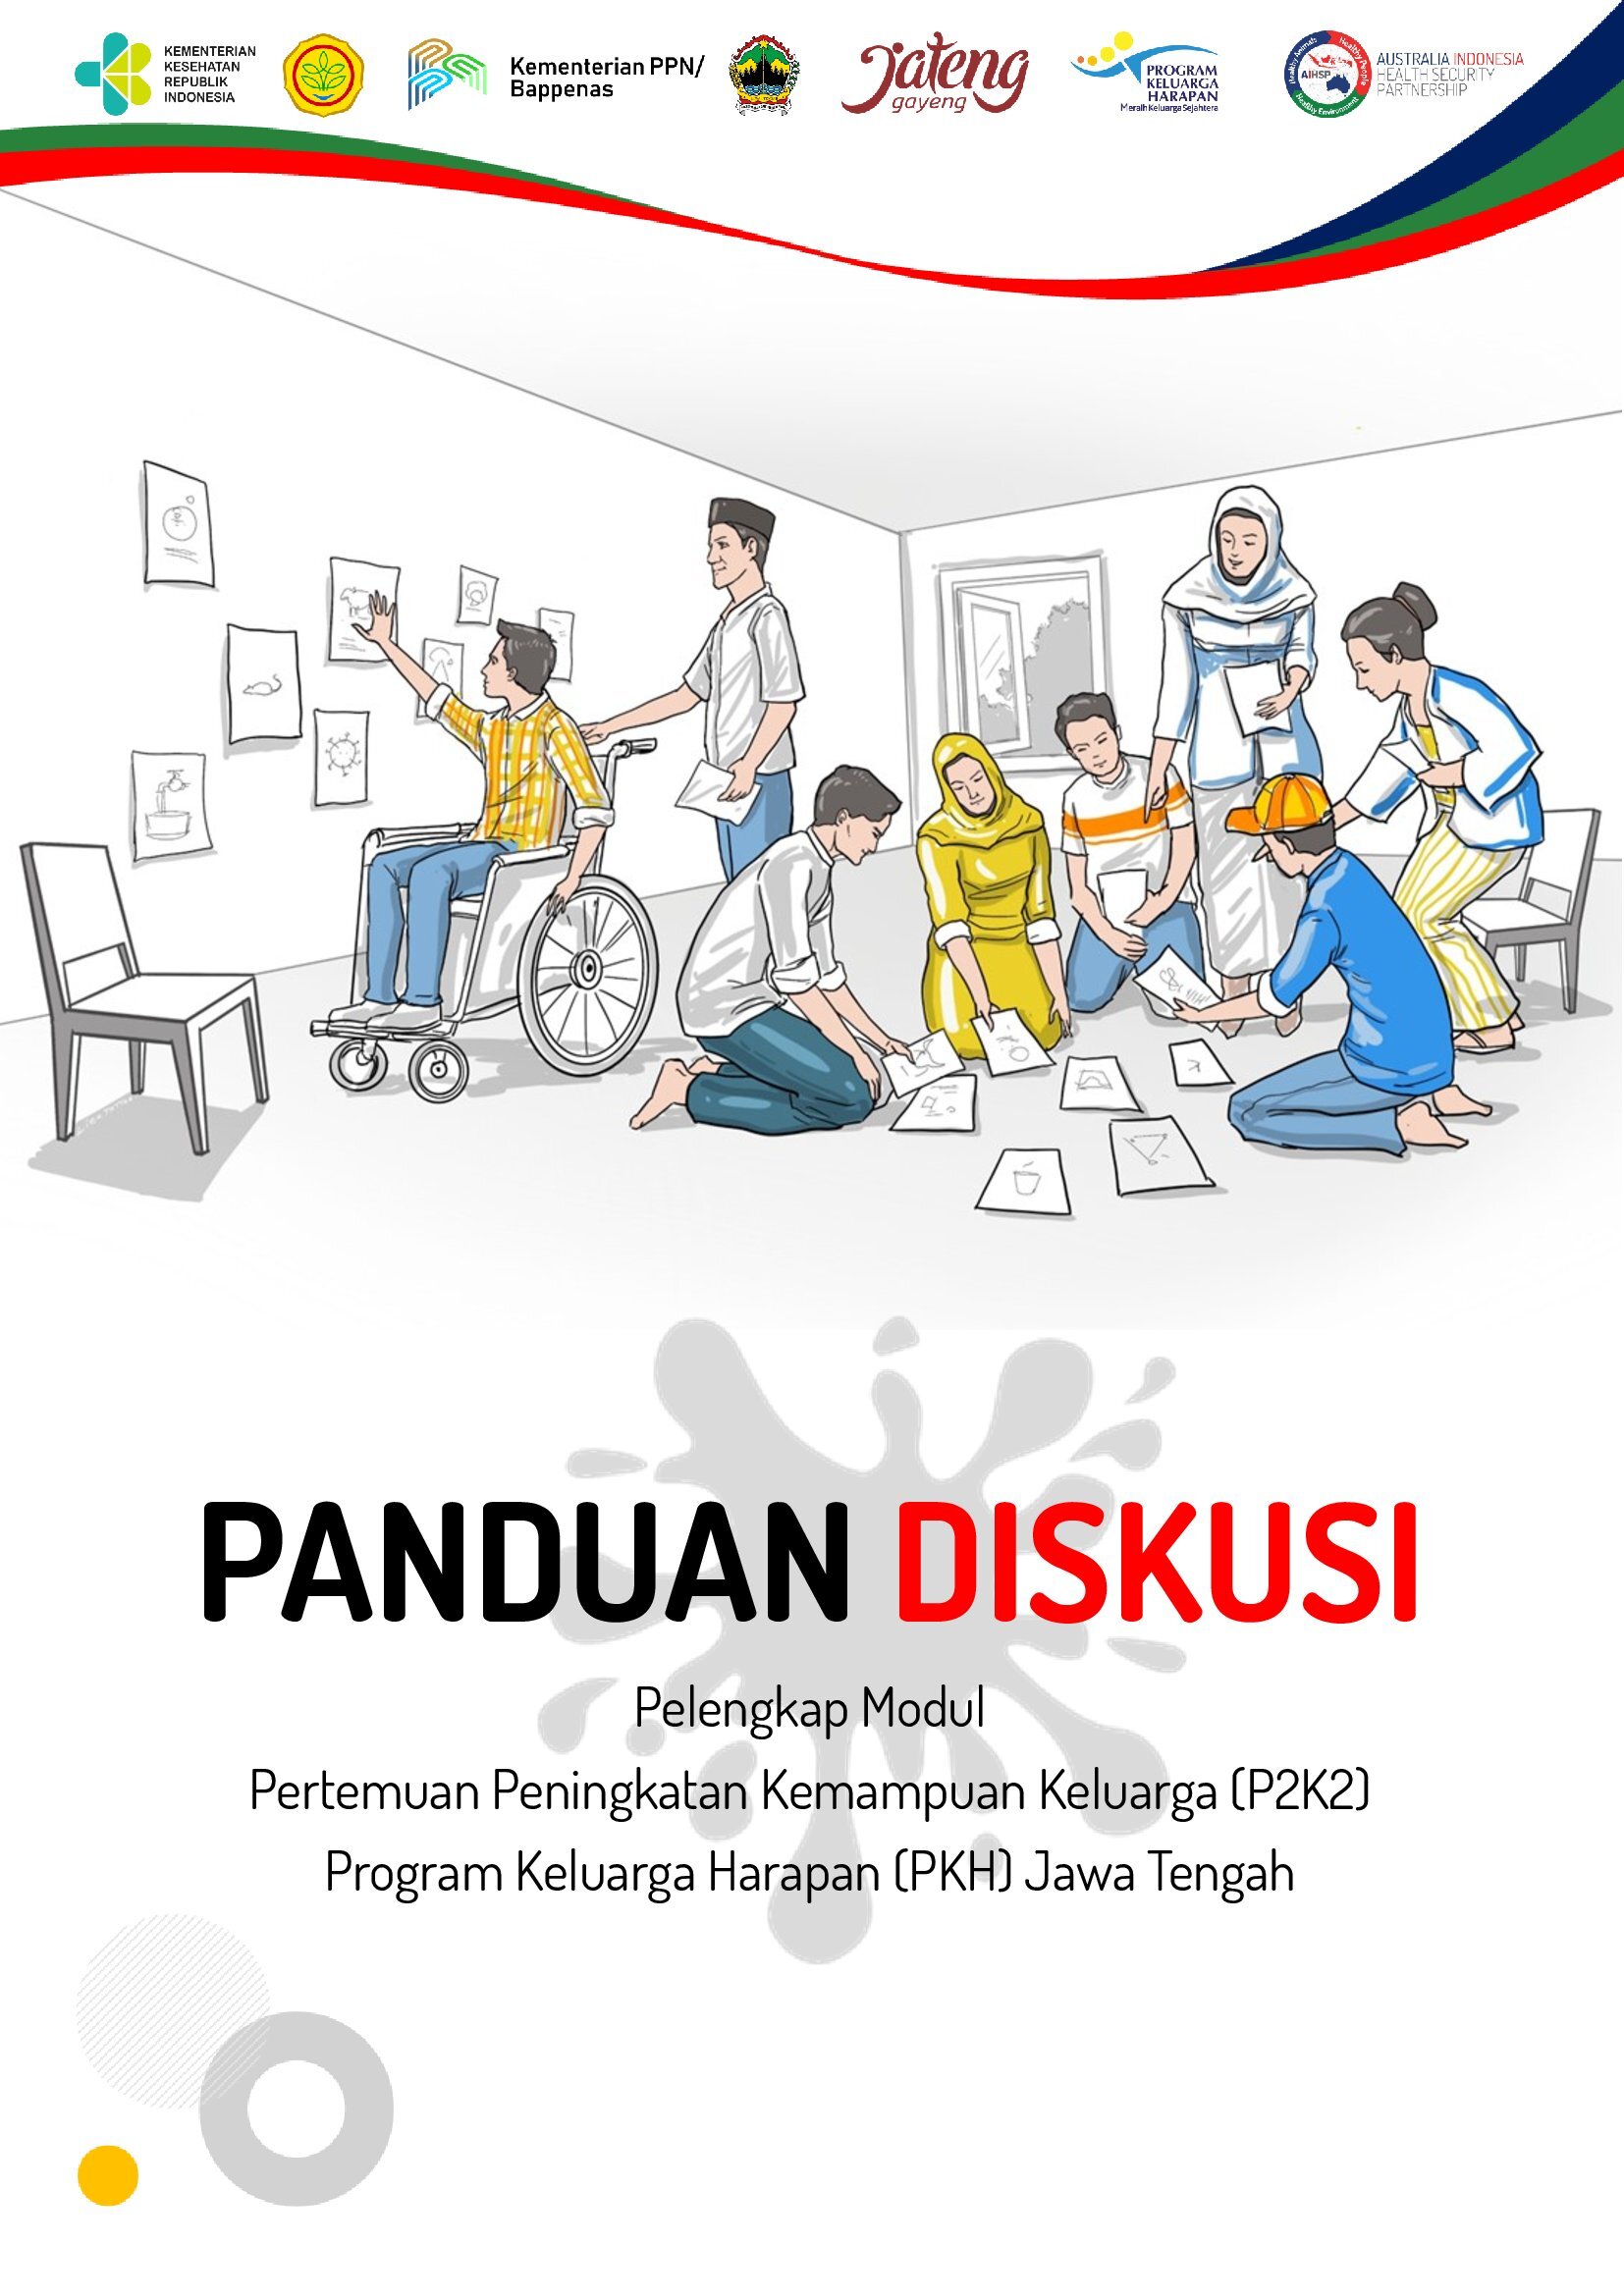 Panduan Diskusi Pelengkap Modul P2K2 Program Keluarga Harapan (PKH) Jawa Tengah